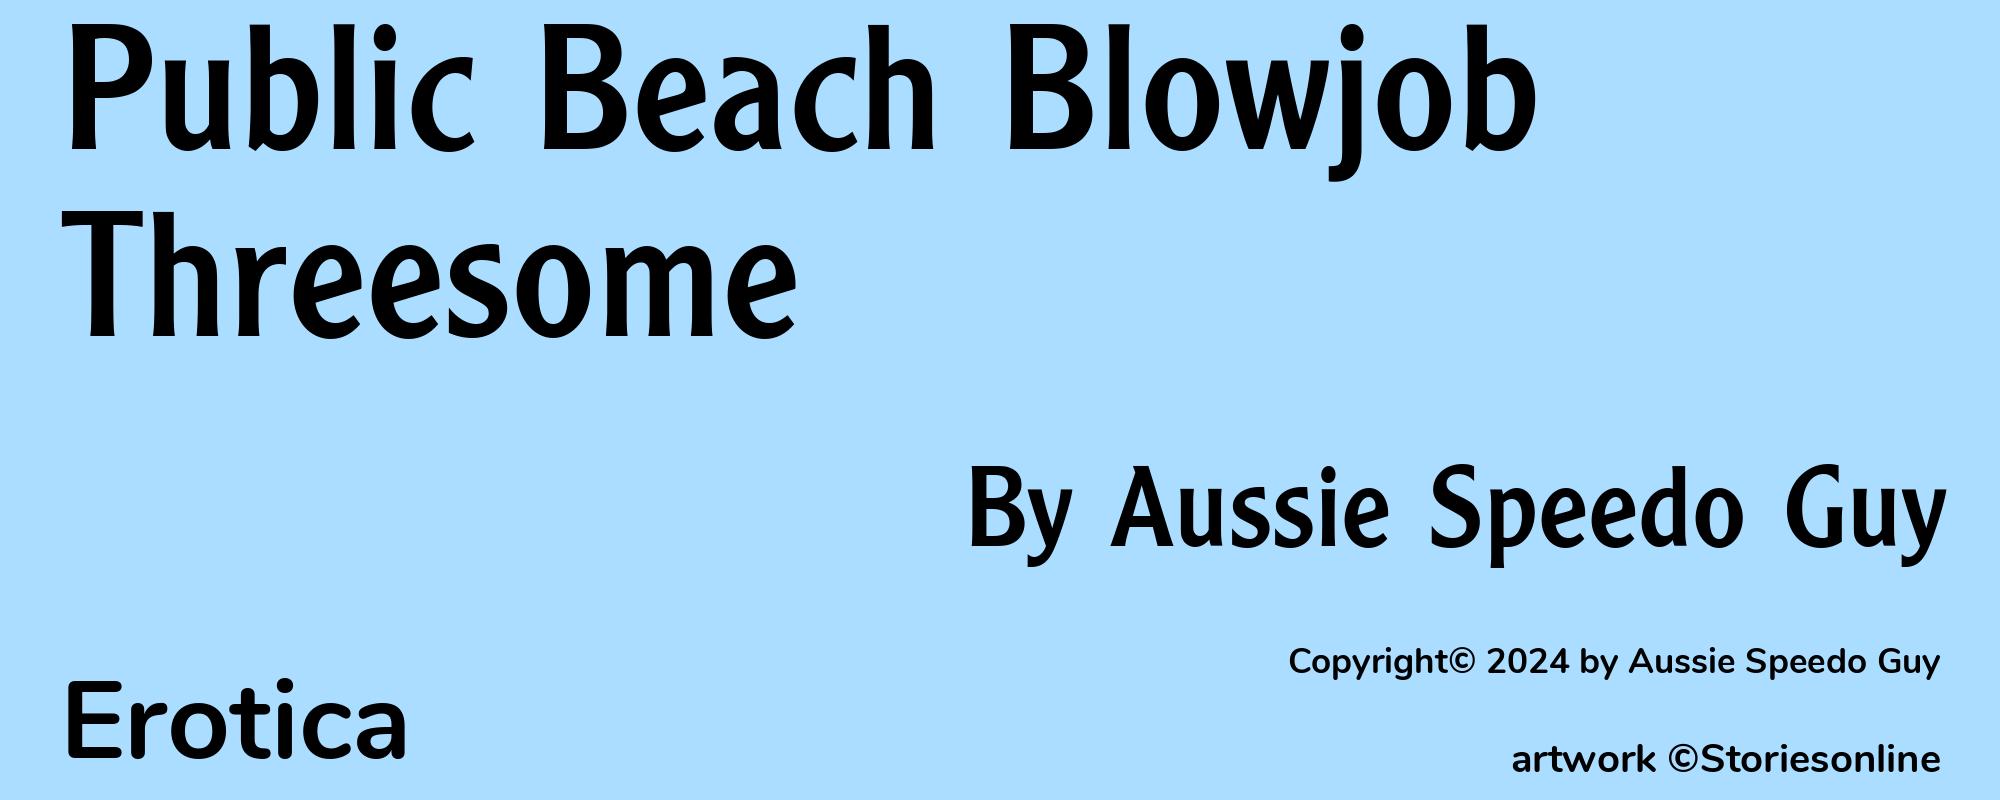 Public Beach Blowjob Threesome - Cover